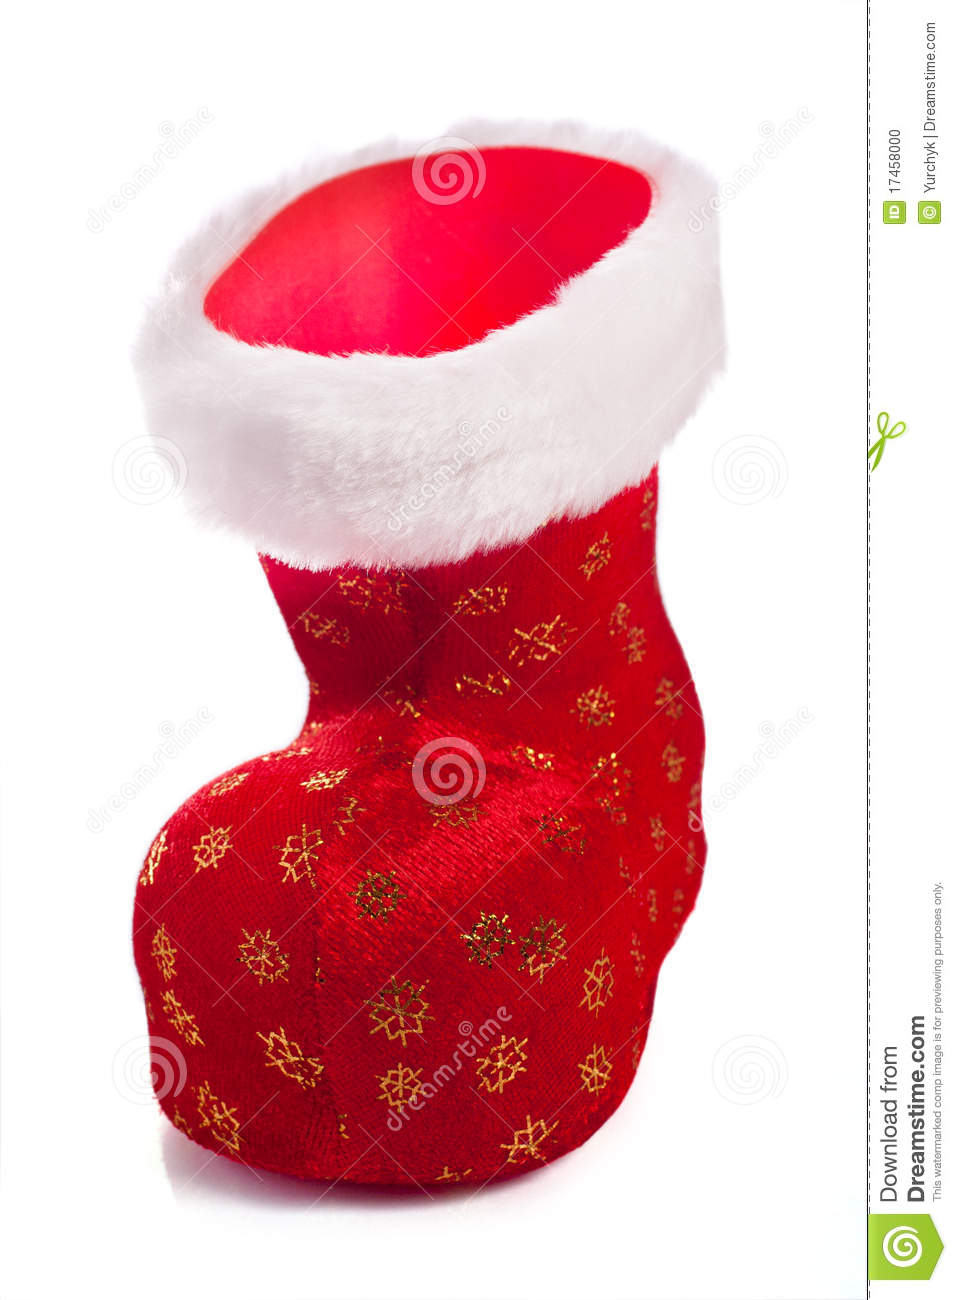 Empty Red Santa Shoe Isolated Over White Stock Photo   Image  17458000